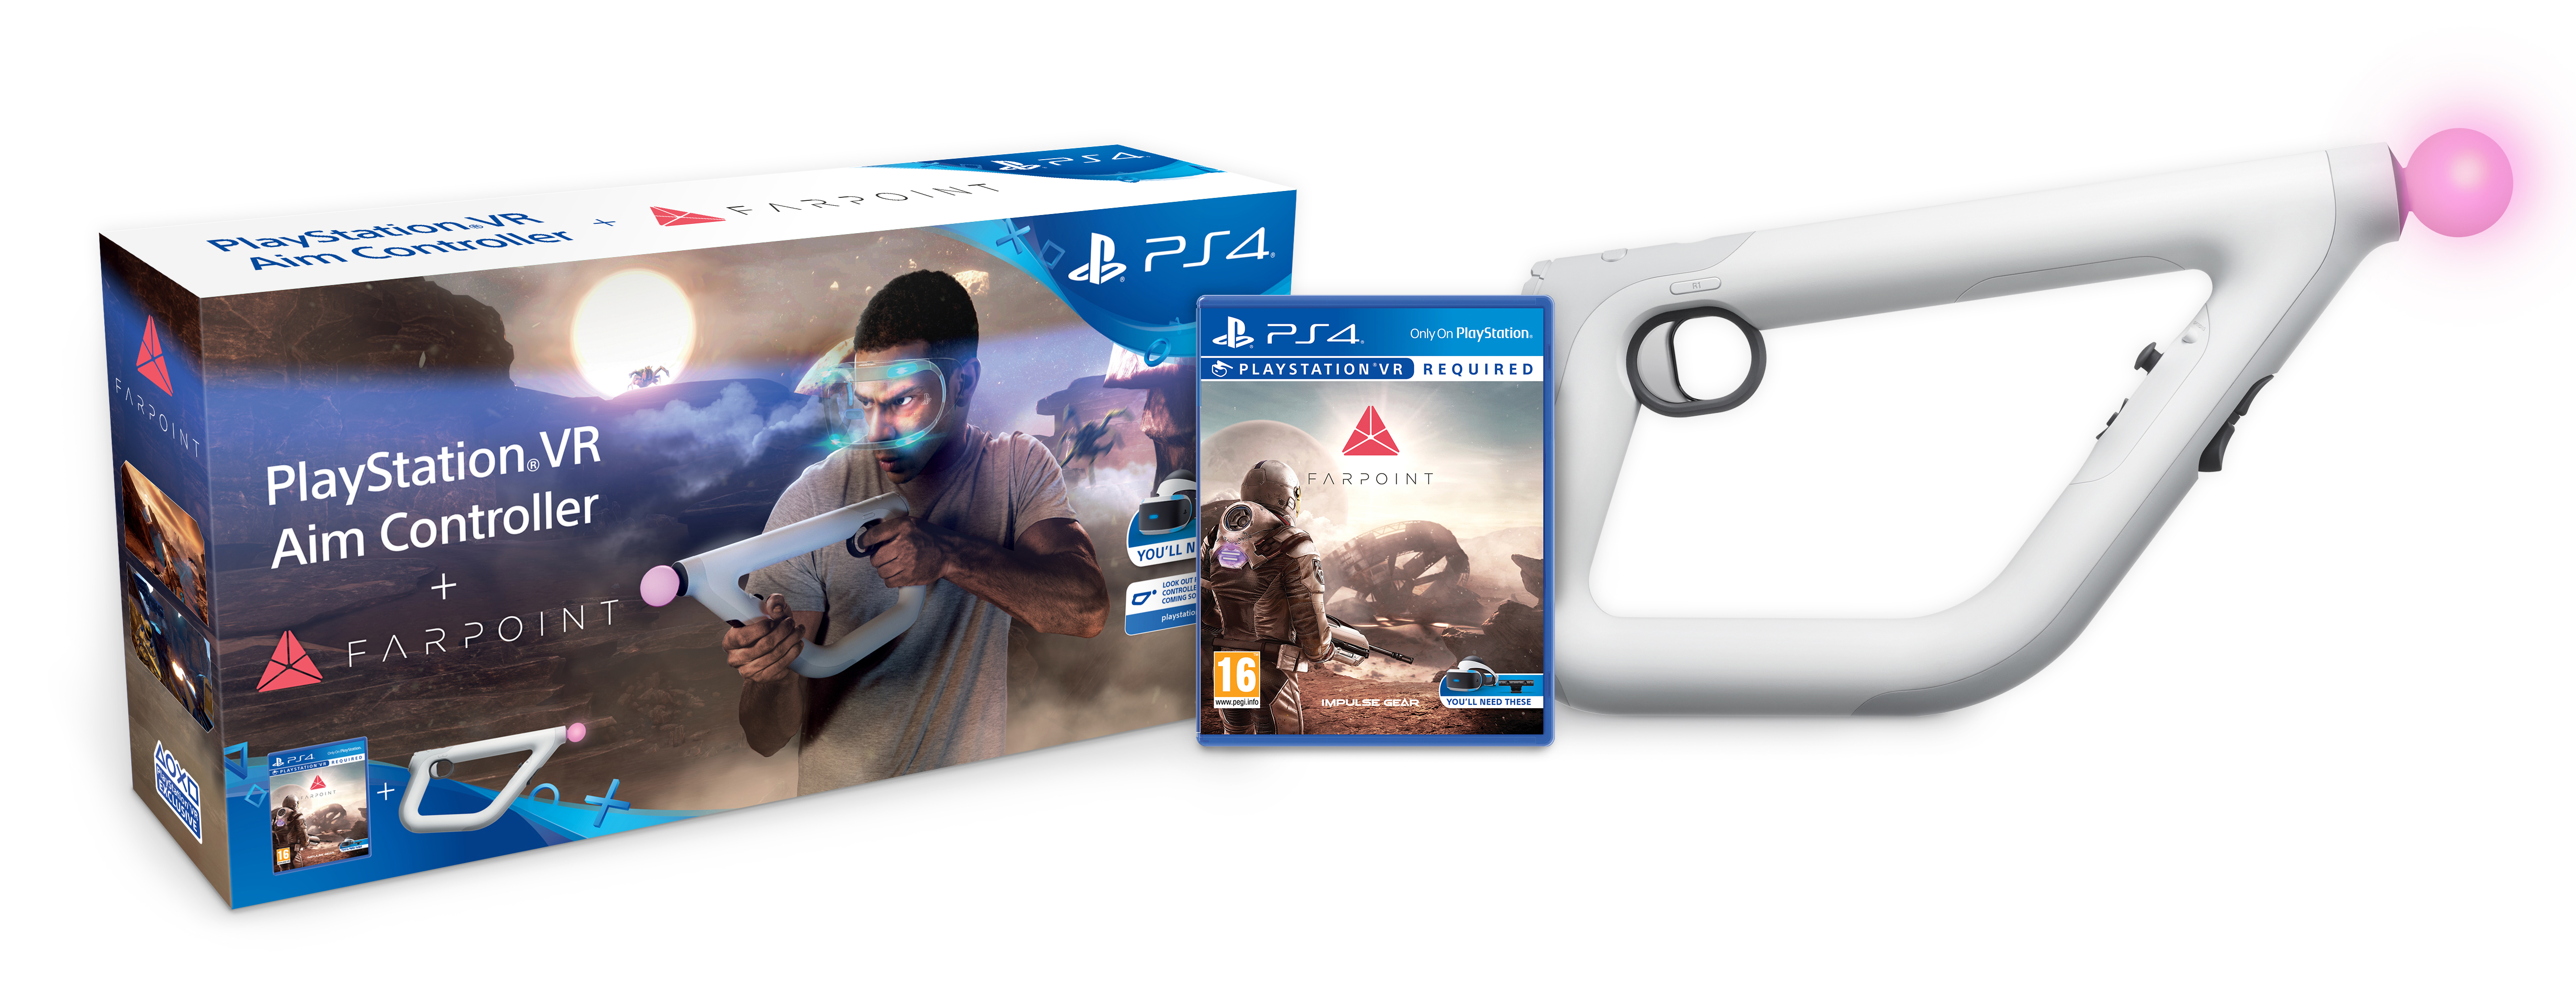 Выход контроллера Aim для PlayStation VR намечен на май текущего года